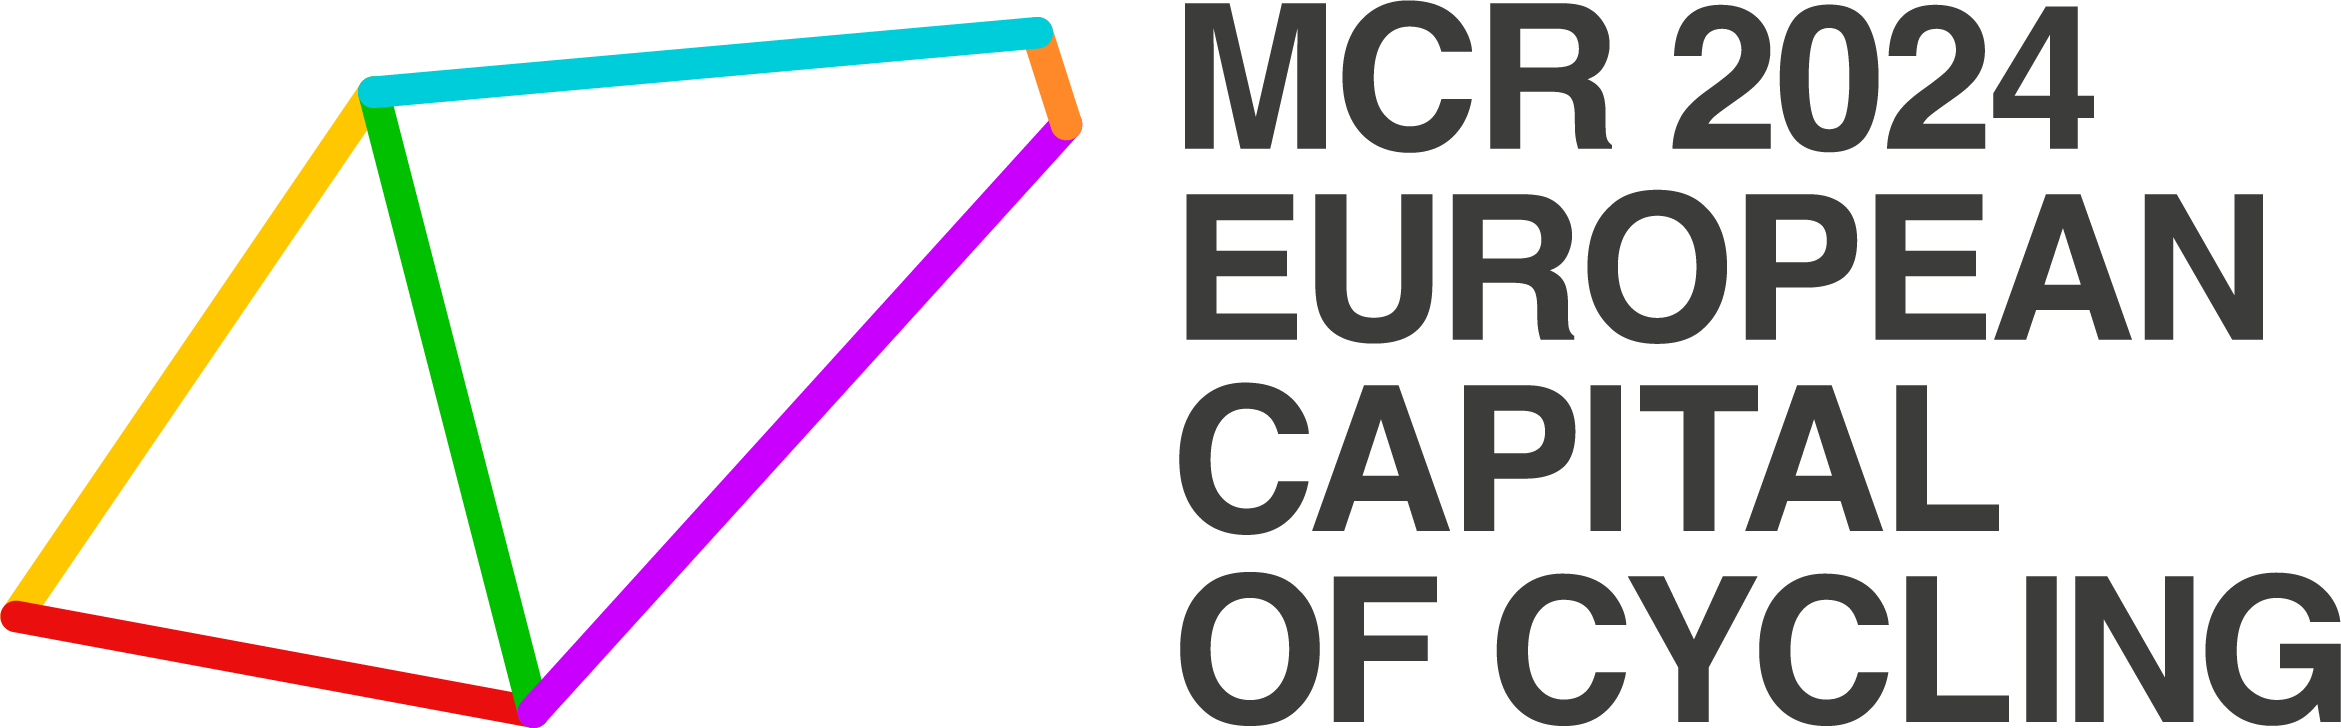 European Capital of Cycling logo